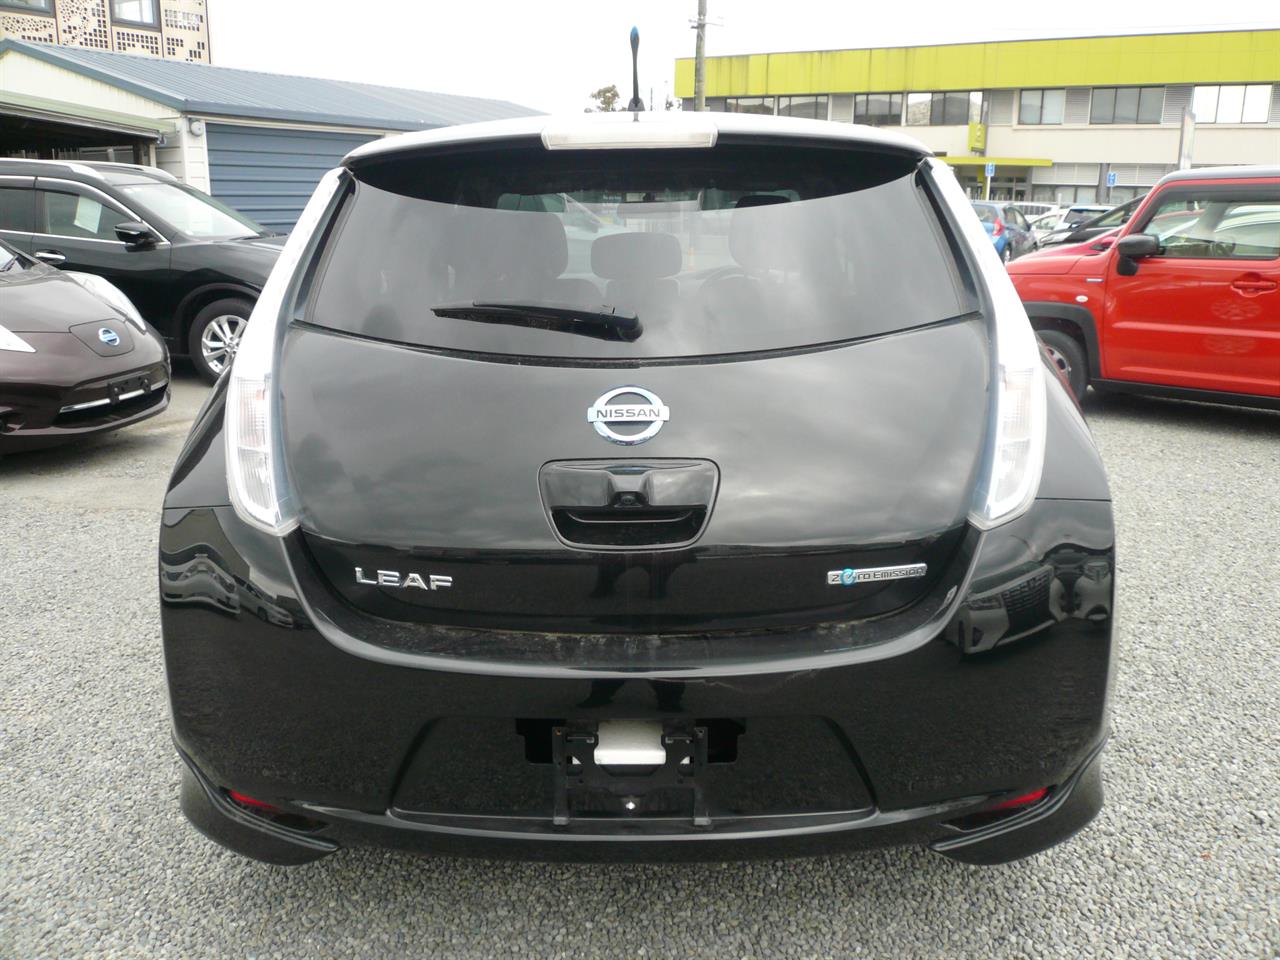 2015 Nissan Leaf 24kwh Gen 2